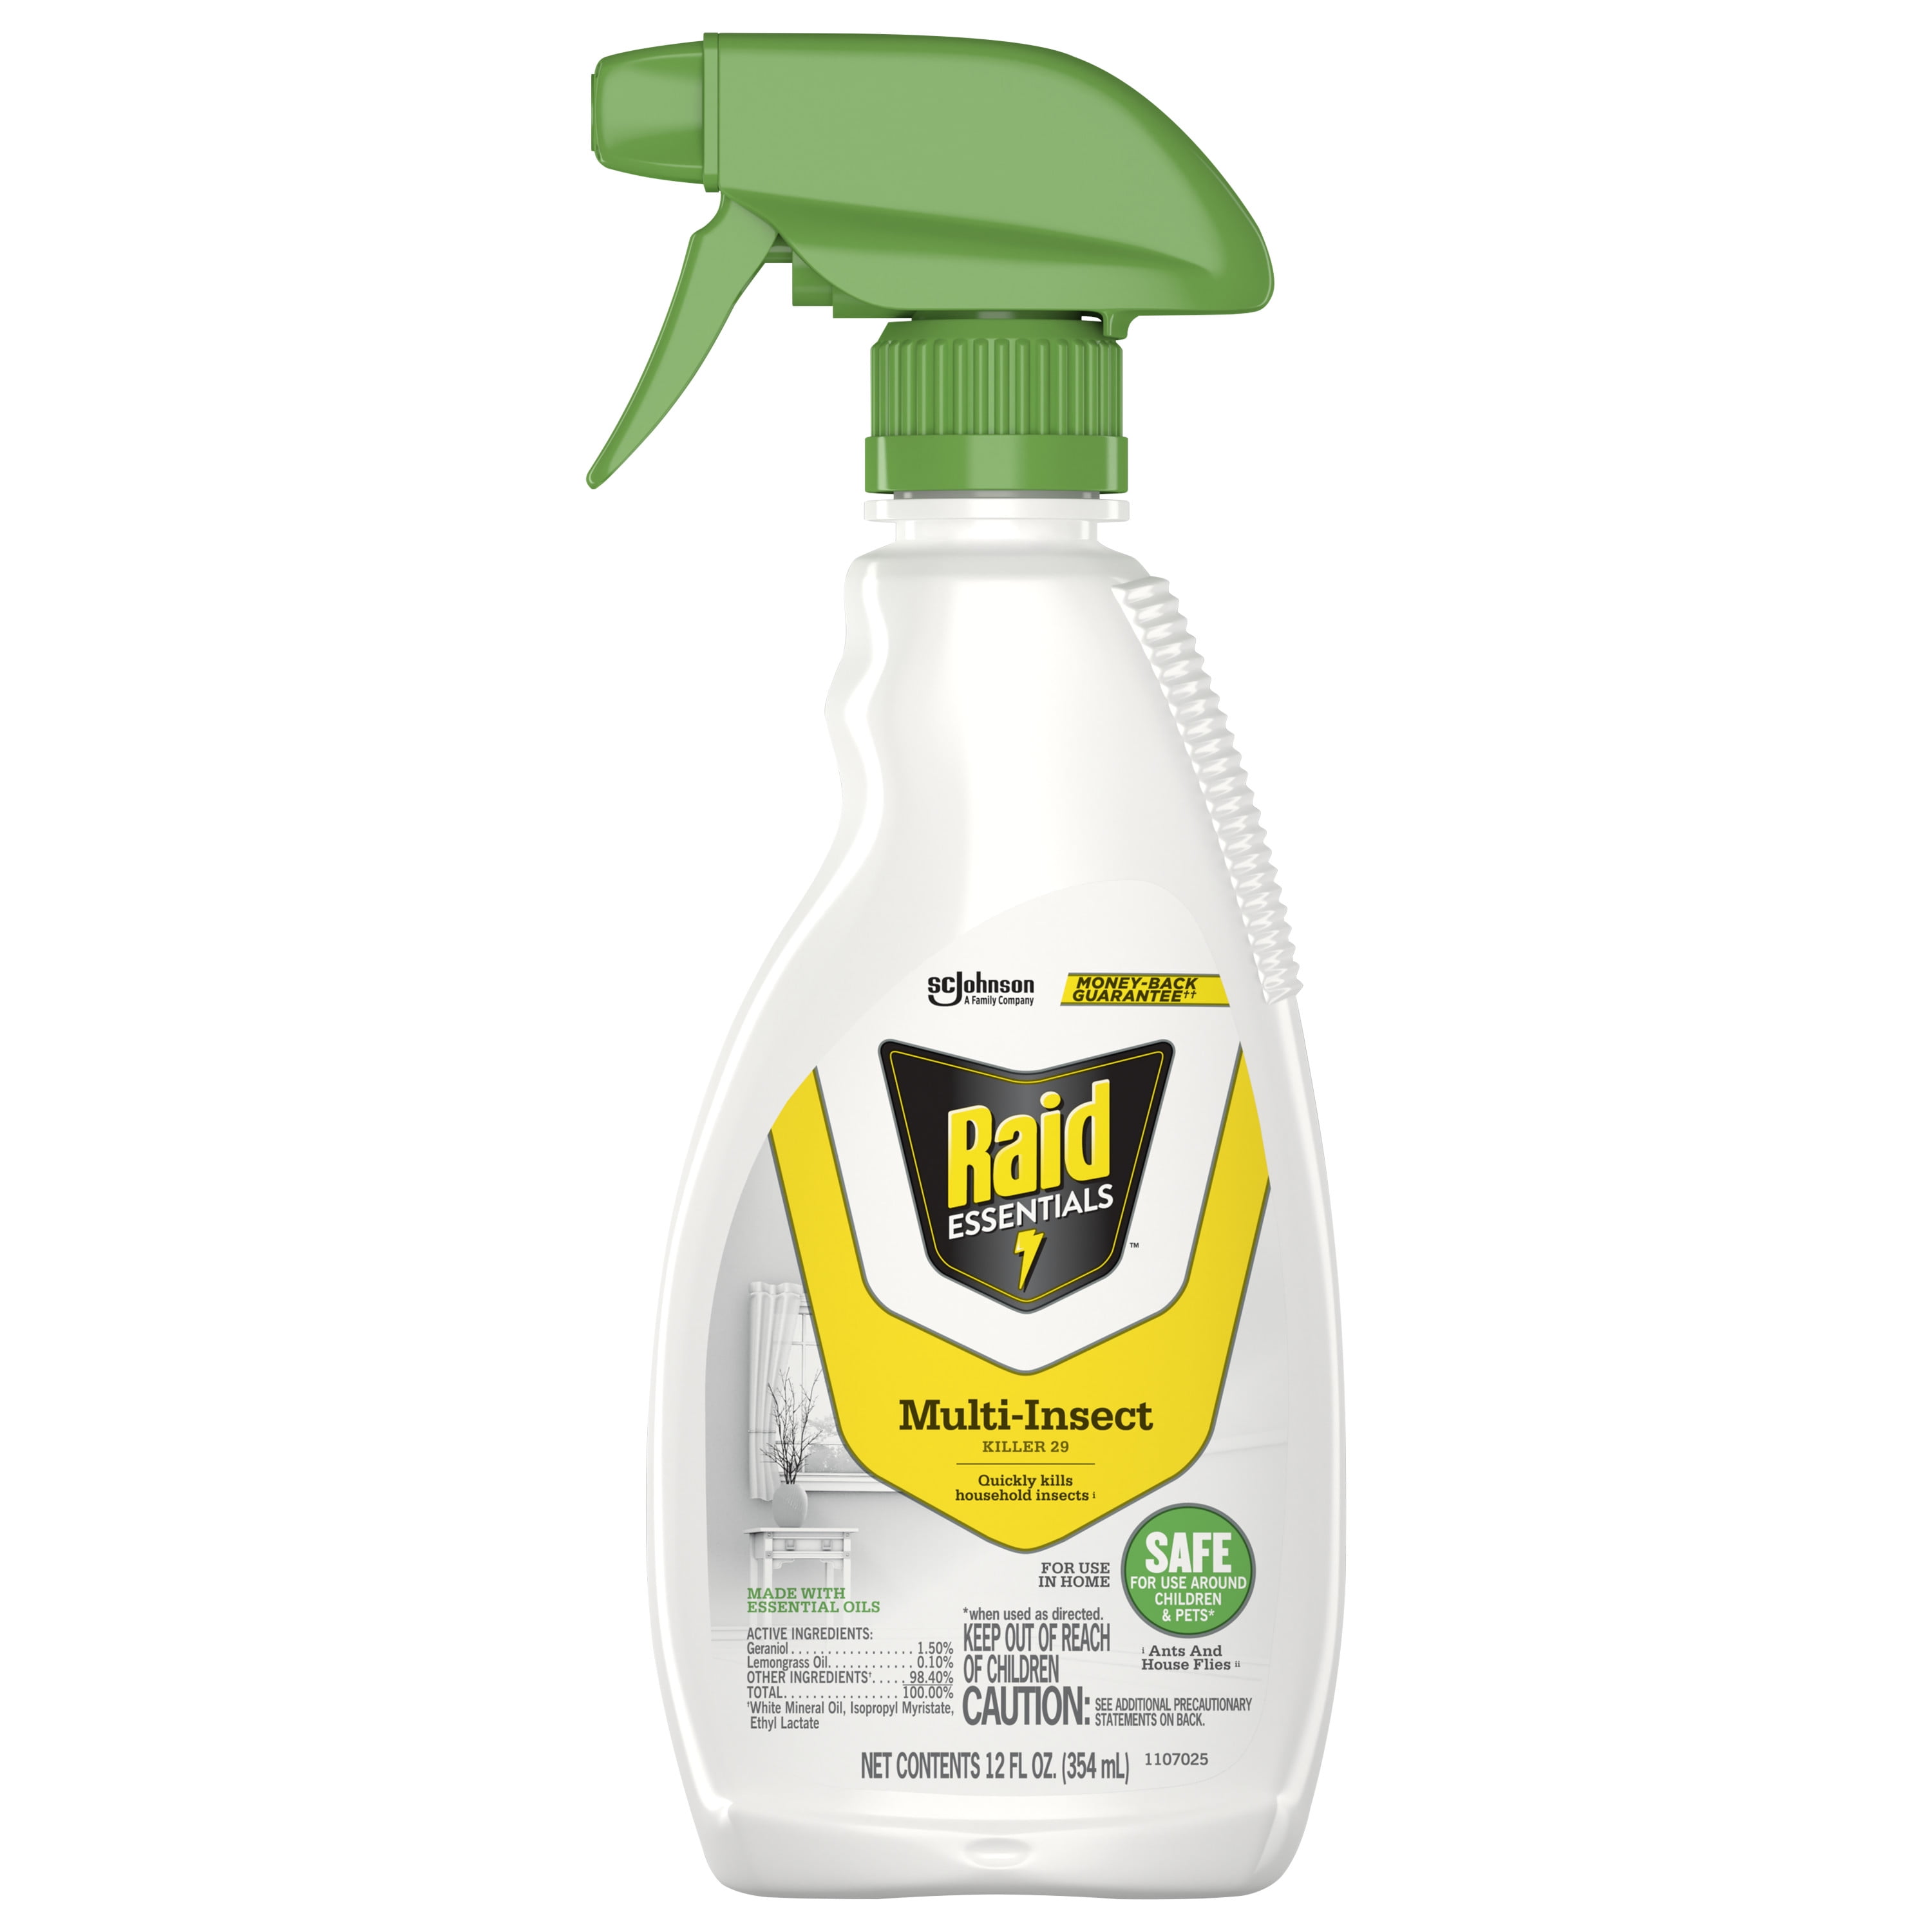 Raid® Essentials Multi-Insect Killer 29, Essential Oil Insecticide